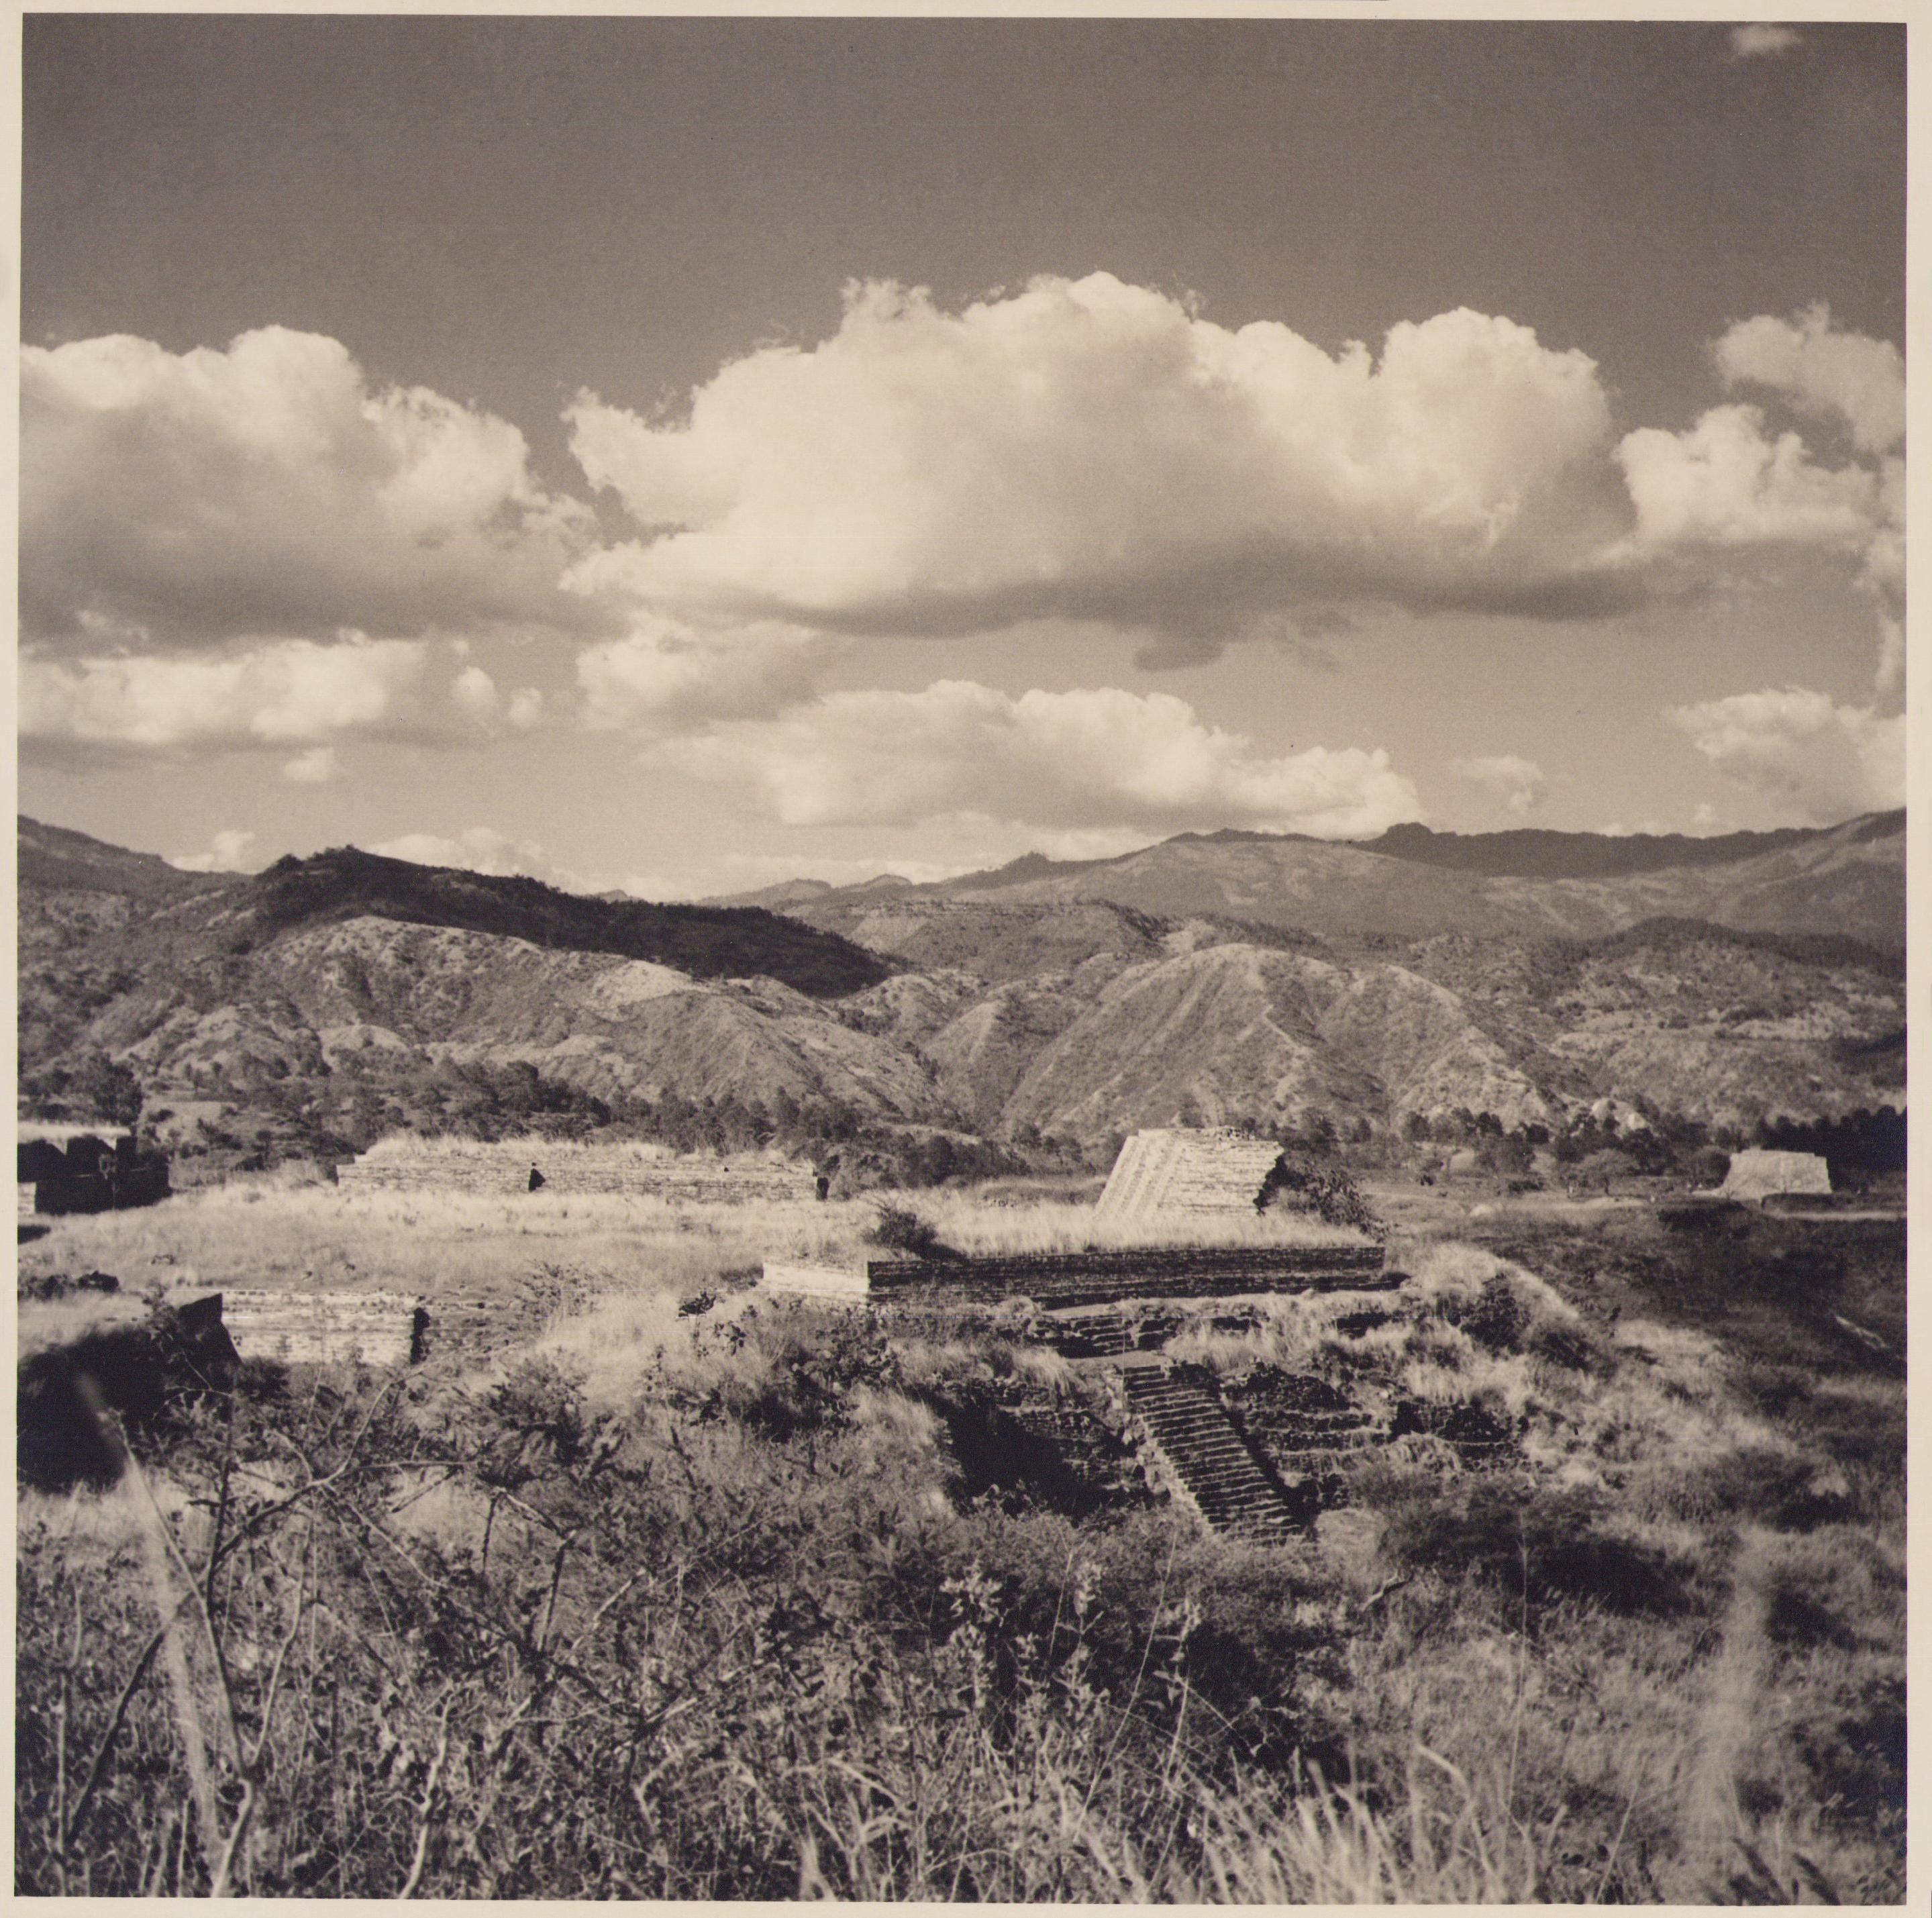 Hanna Seidel Portrait Photograph - Guatemala, Landscape, Black and White Photography, ca. 1960s, 24, 1 x 24 cm